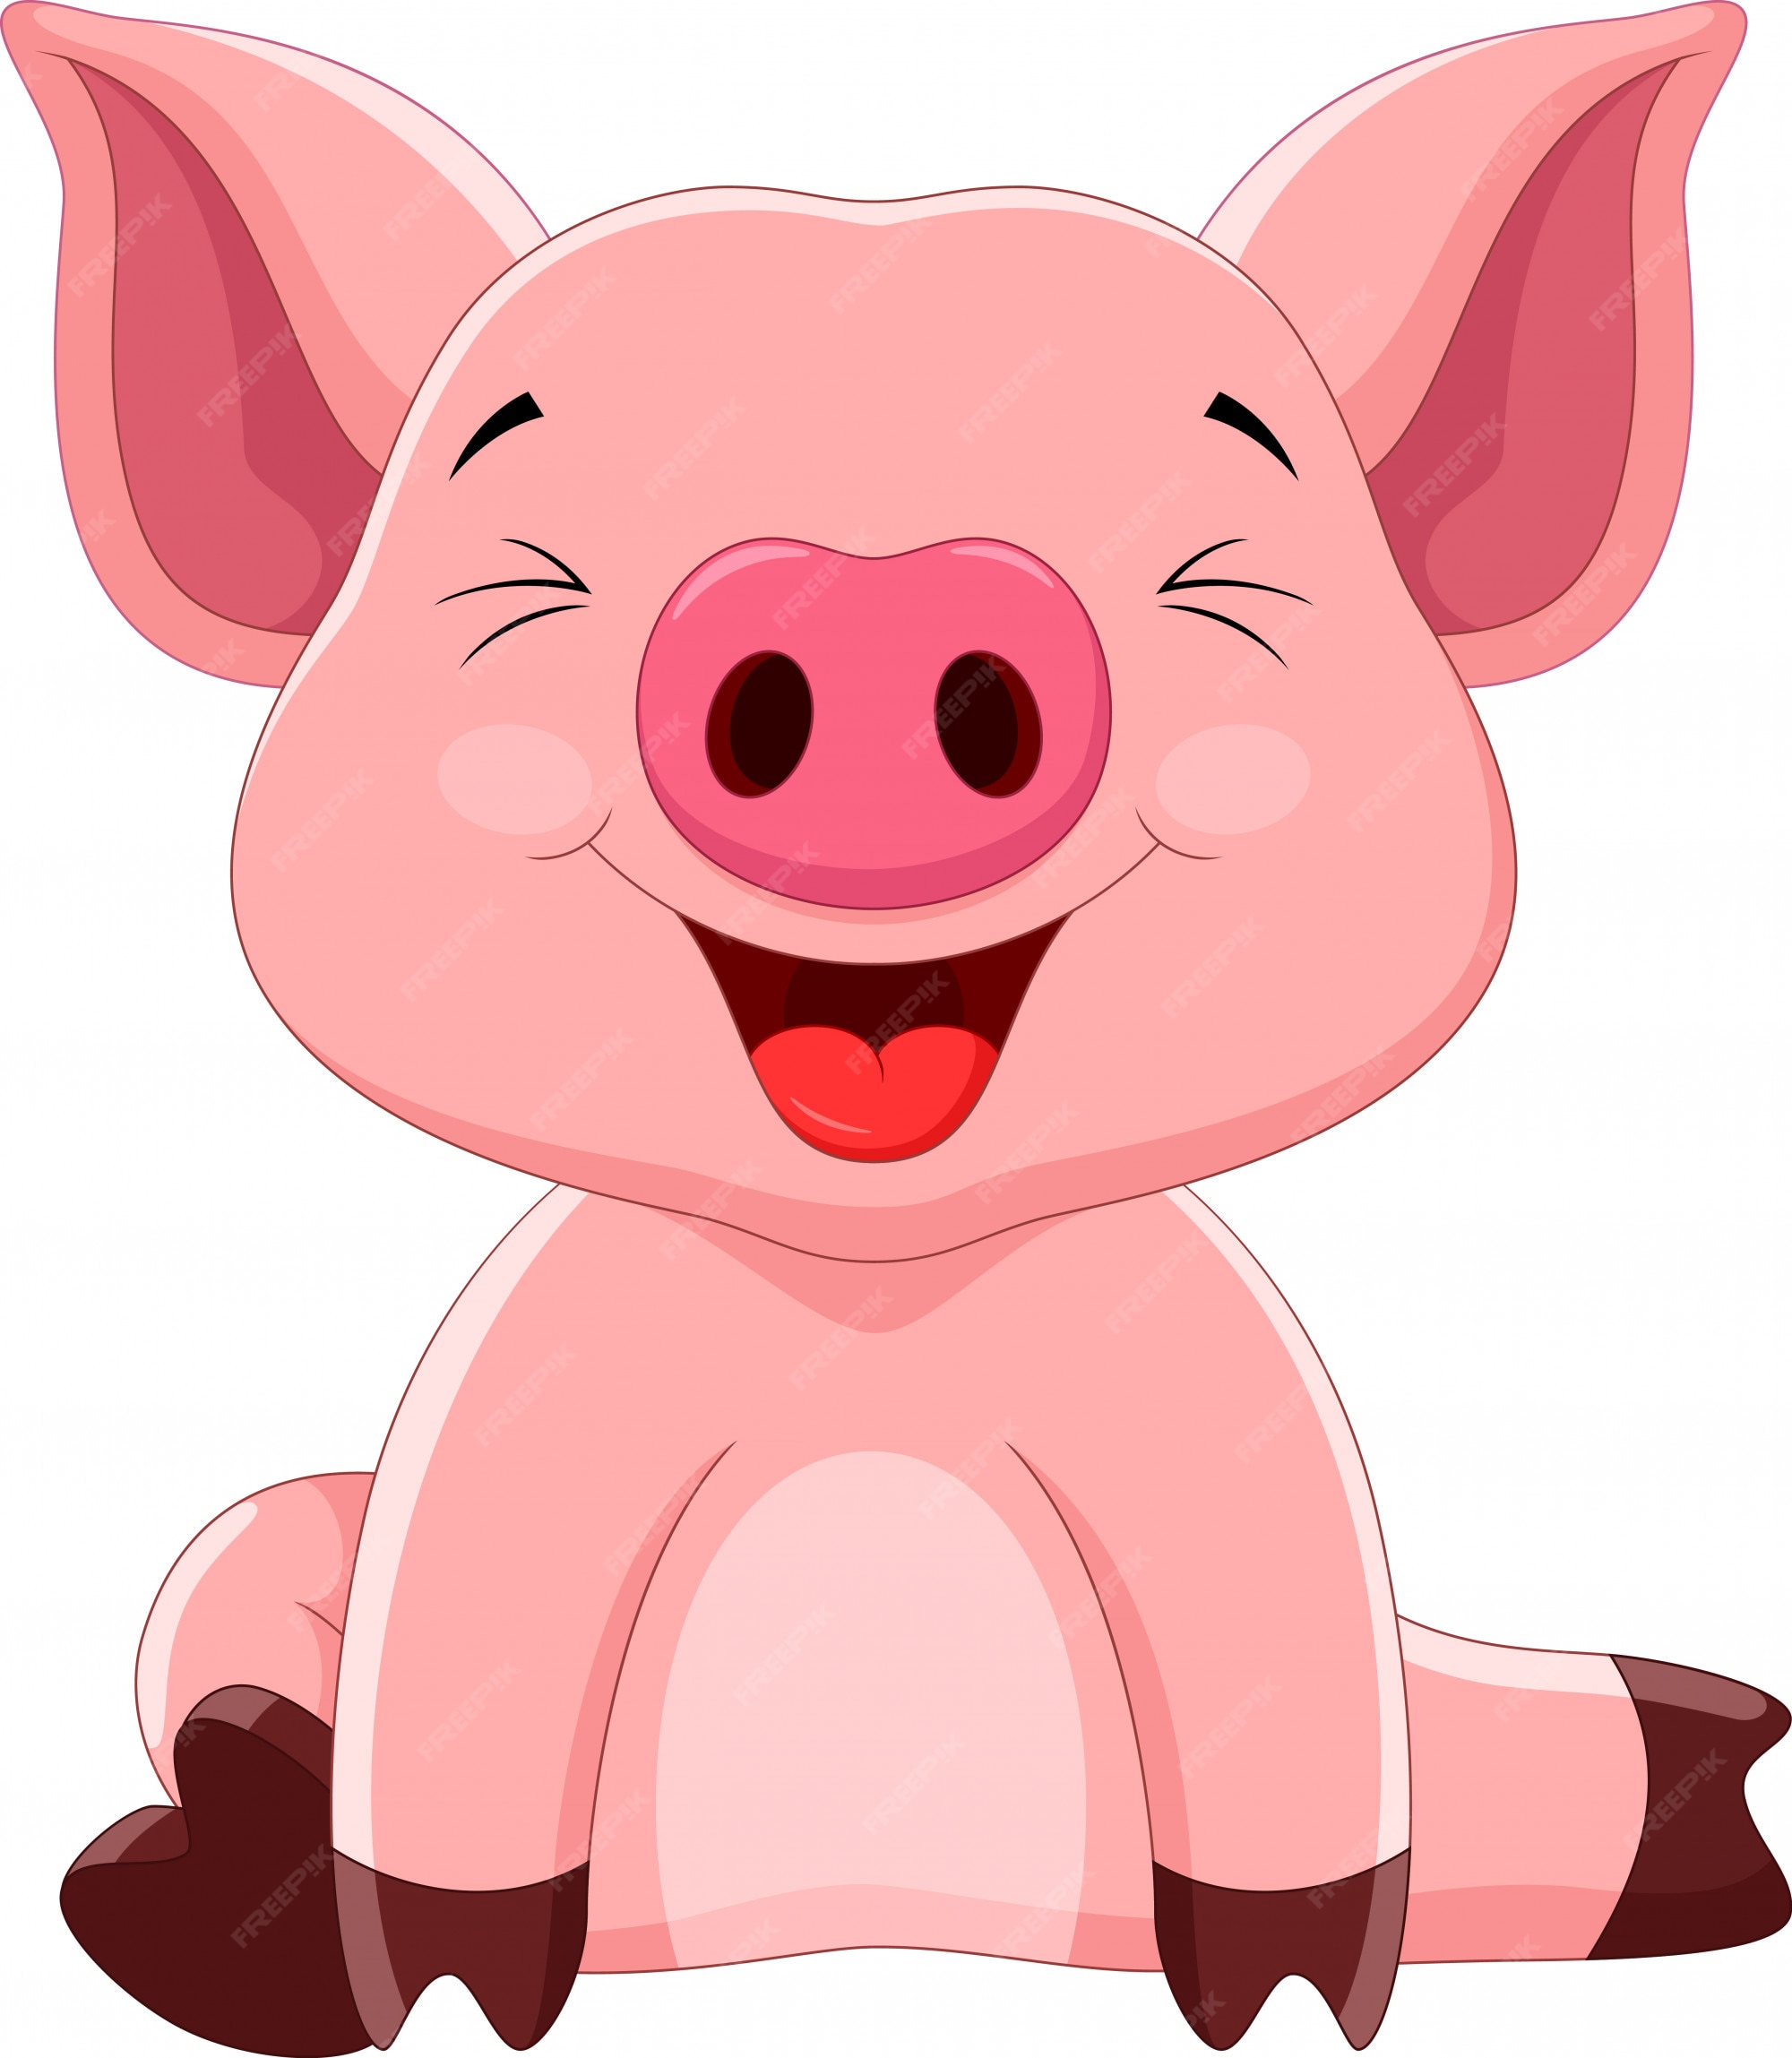 happy-pig-cartoon_160606-374.jpg